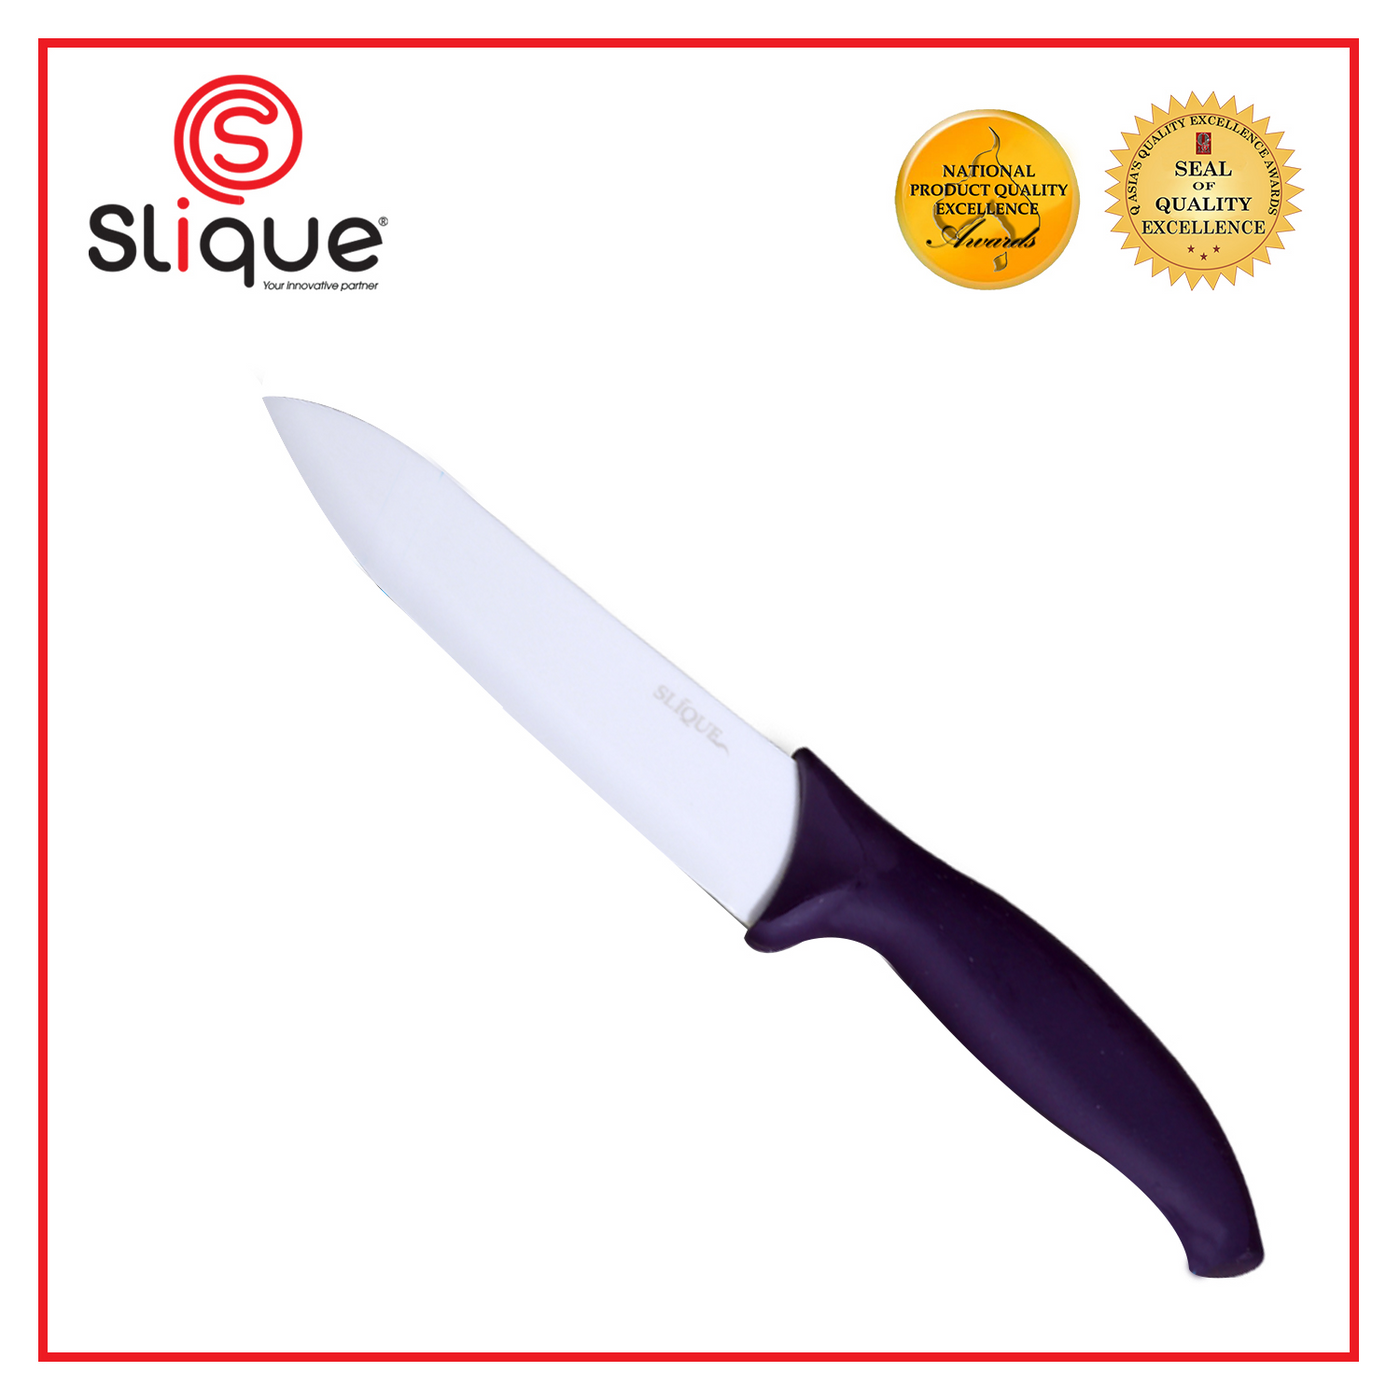 SLIQUE Ceramic Utility Knife 4" Amazing Gift Idea For Any Occasion!